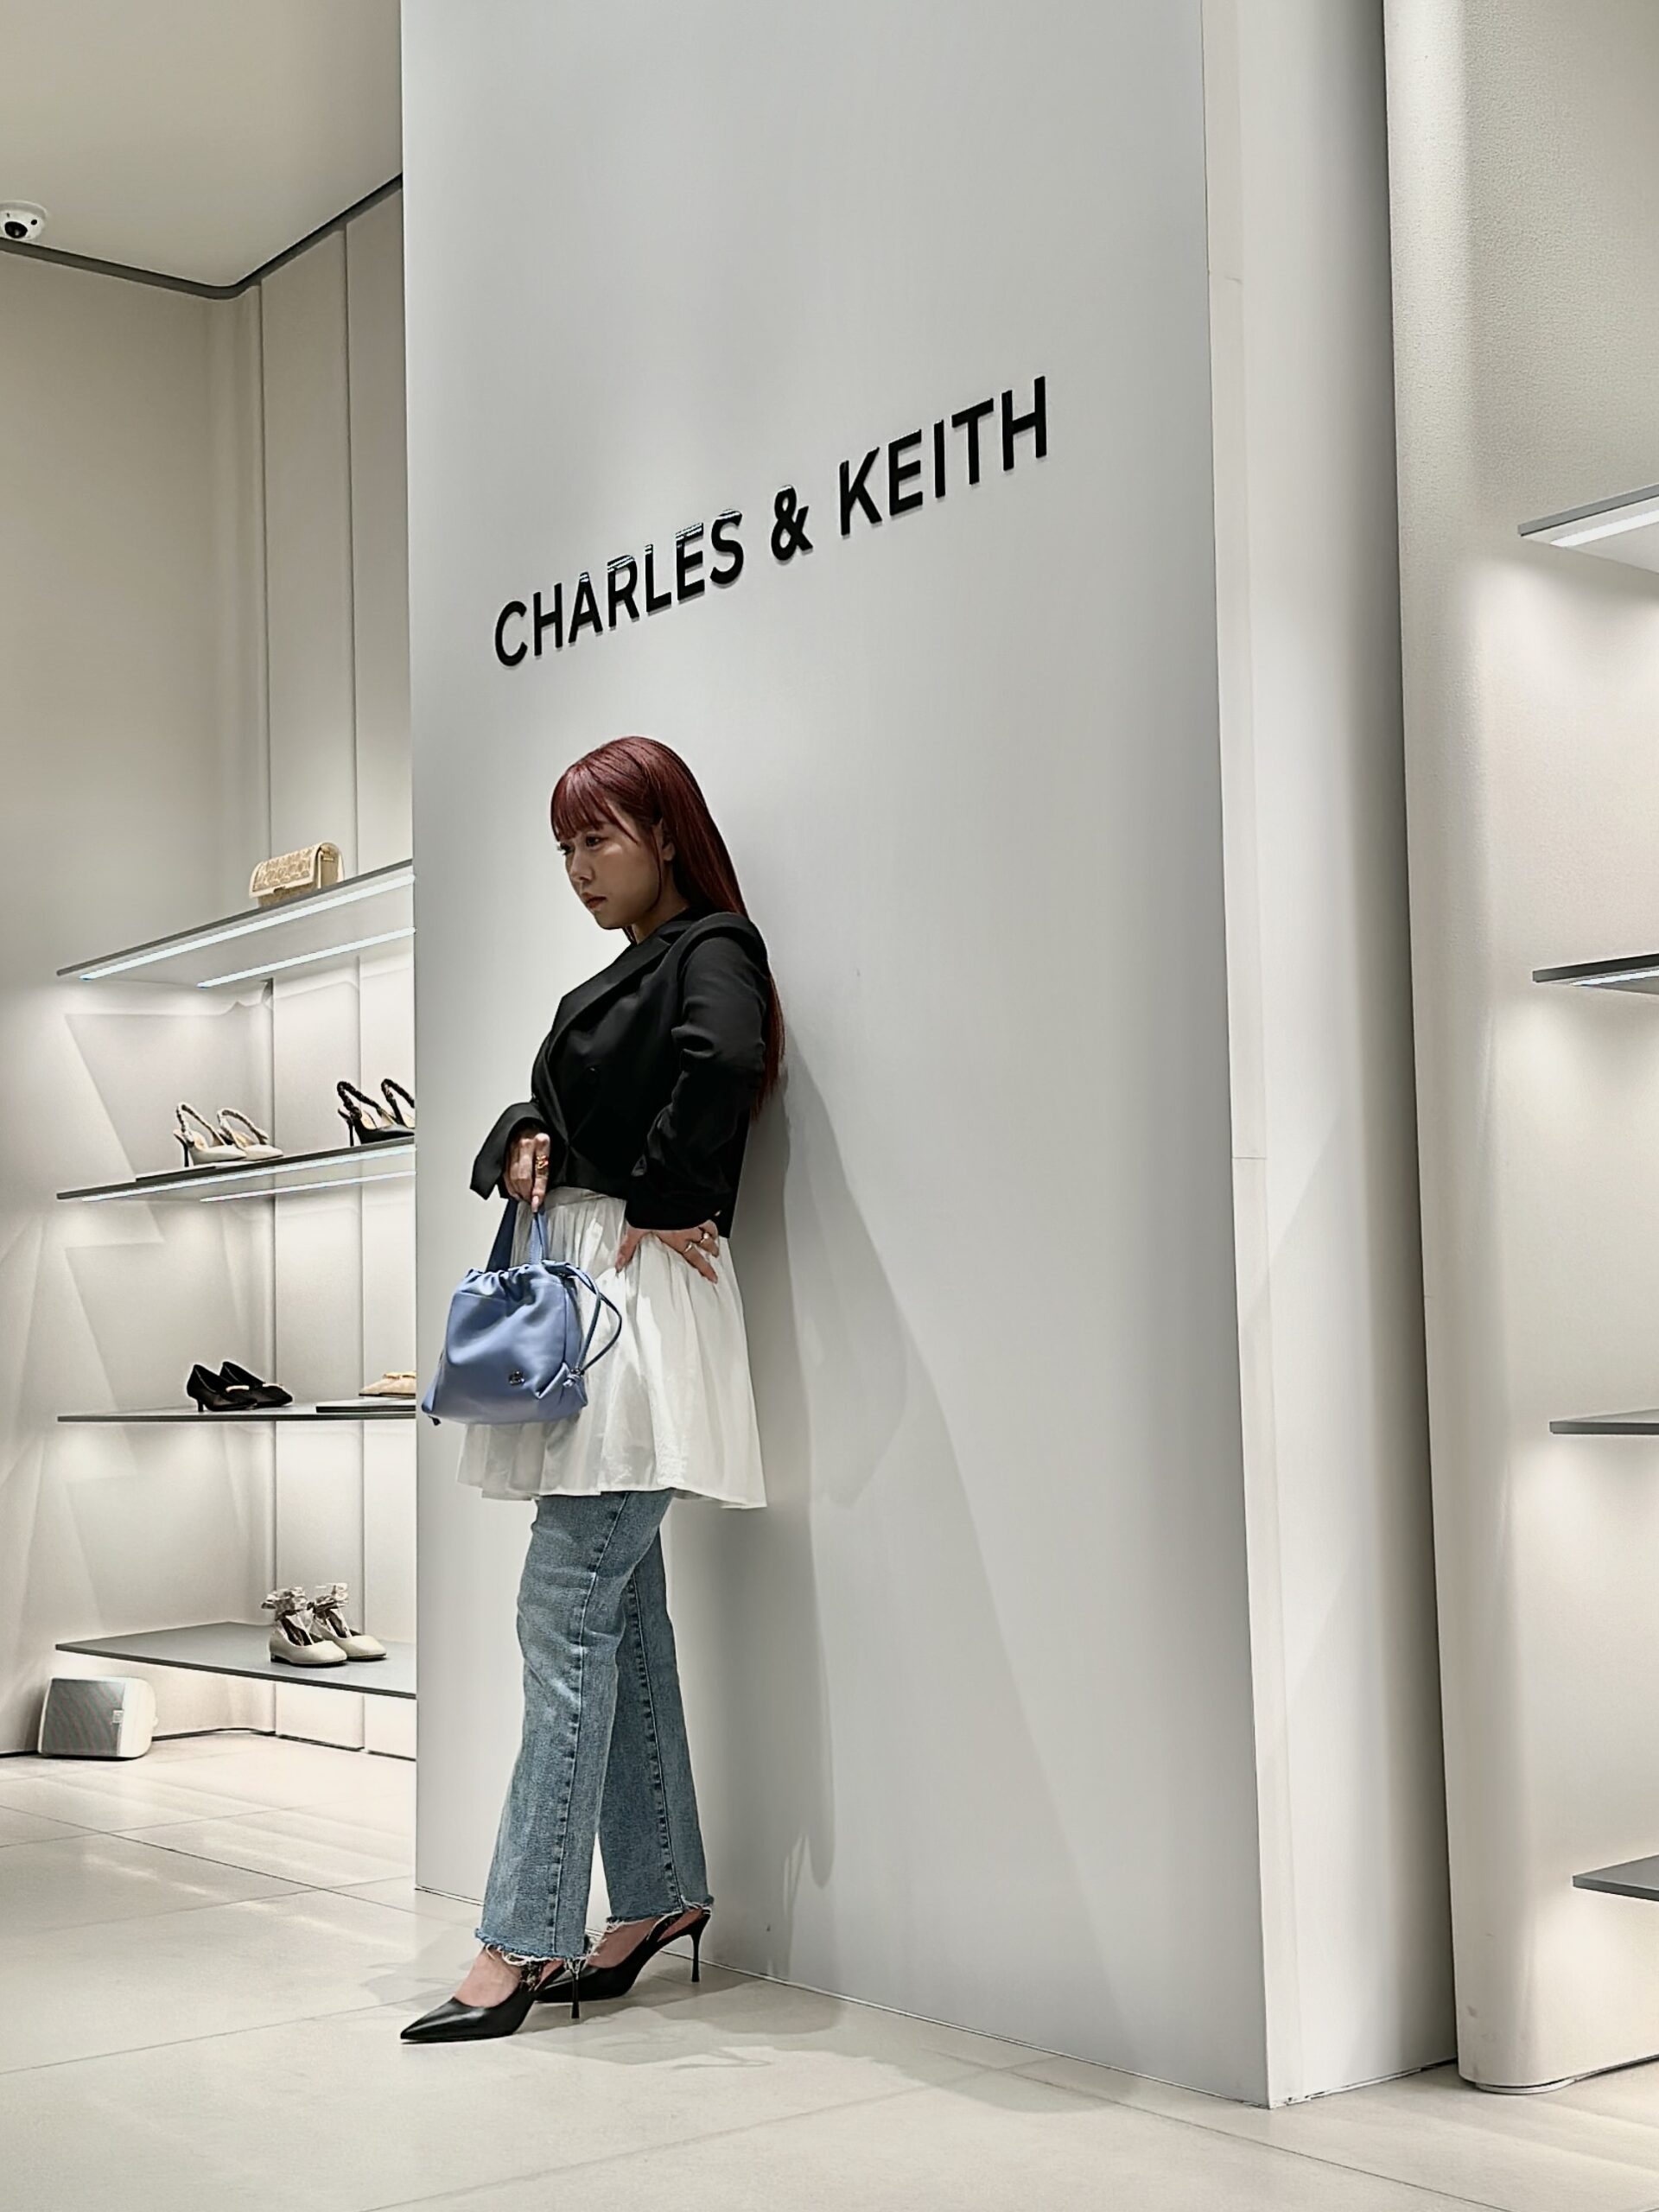 Charles & Keith Shibuya Shop Open Celebration Party チャールズ アンド キース 渋谷店 オープン 記念 パーティー イベント